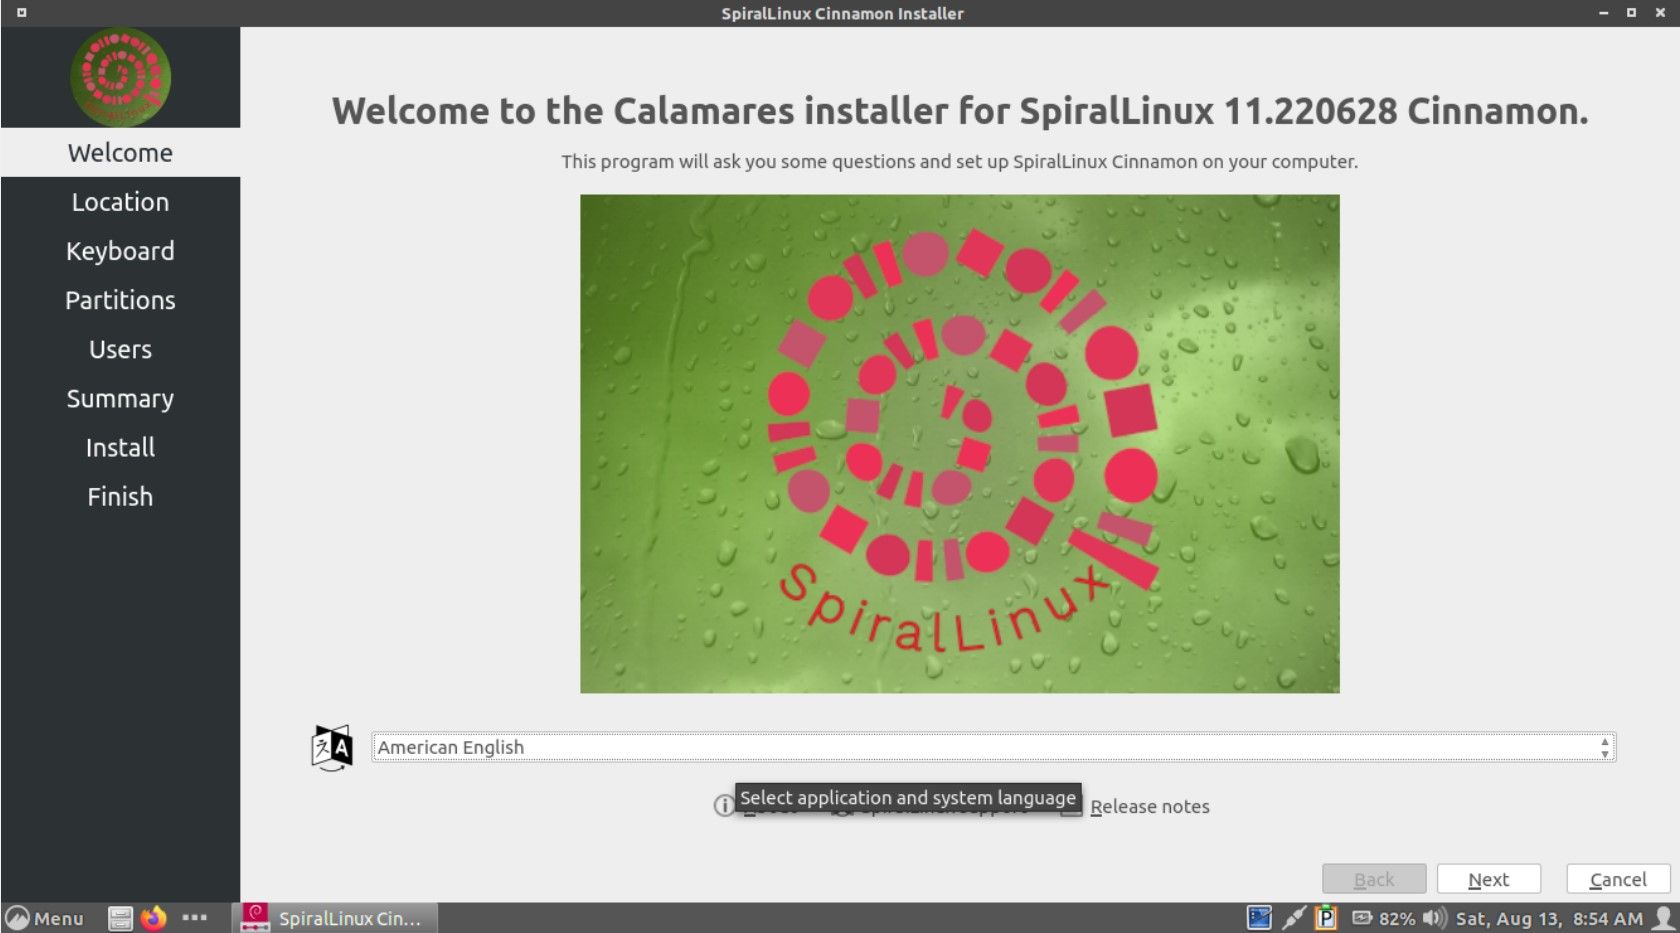 Spiral Linux installer within a Virtual Machine